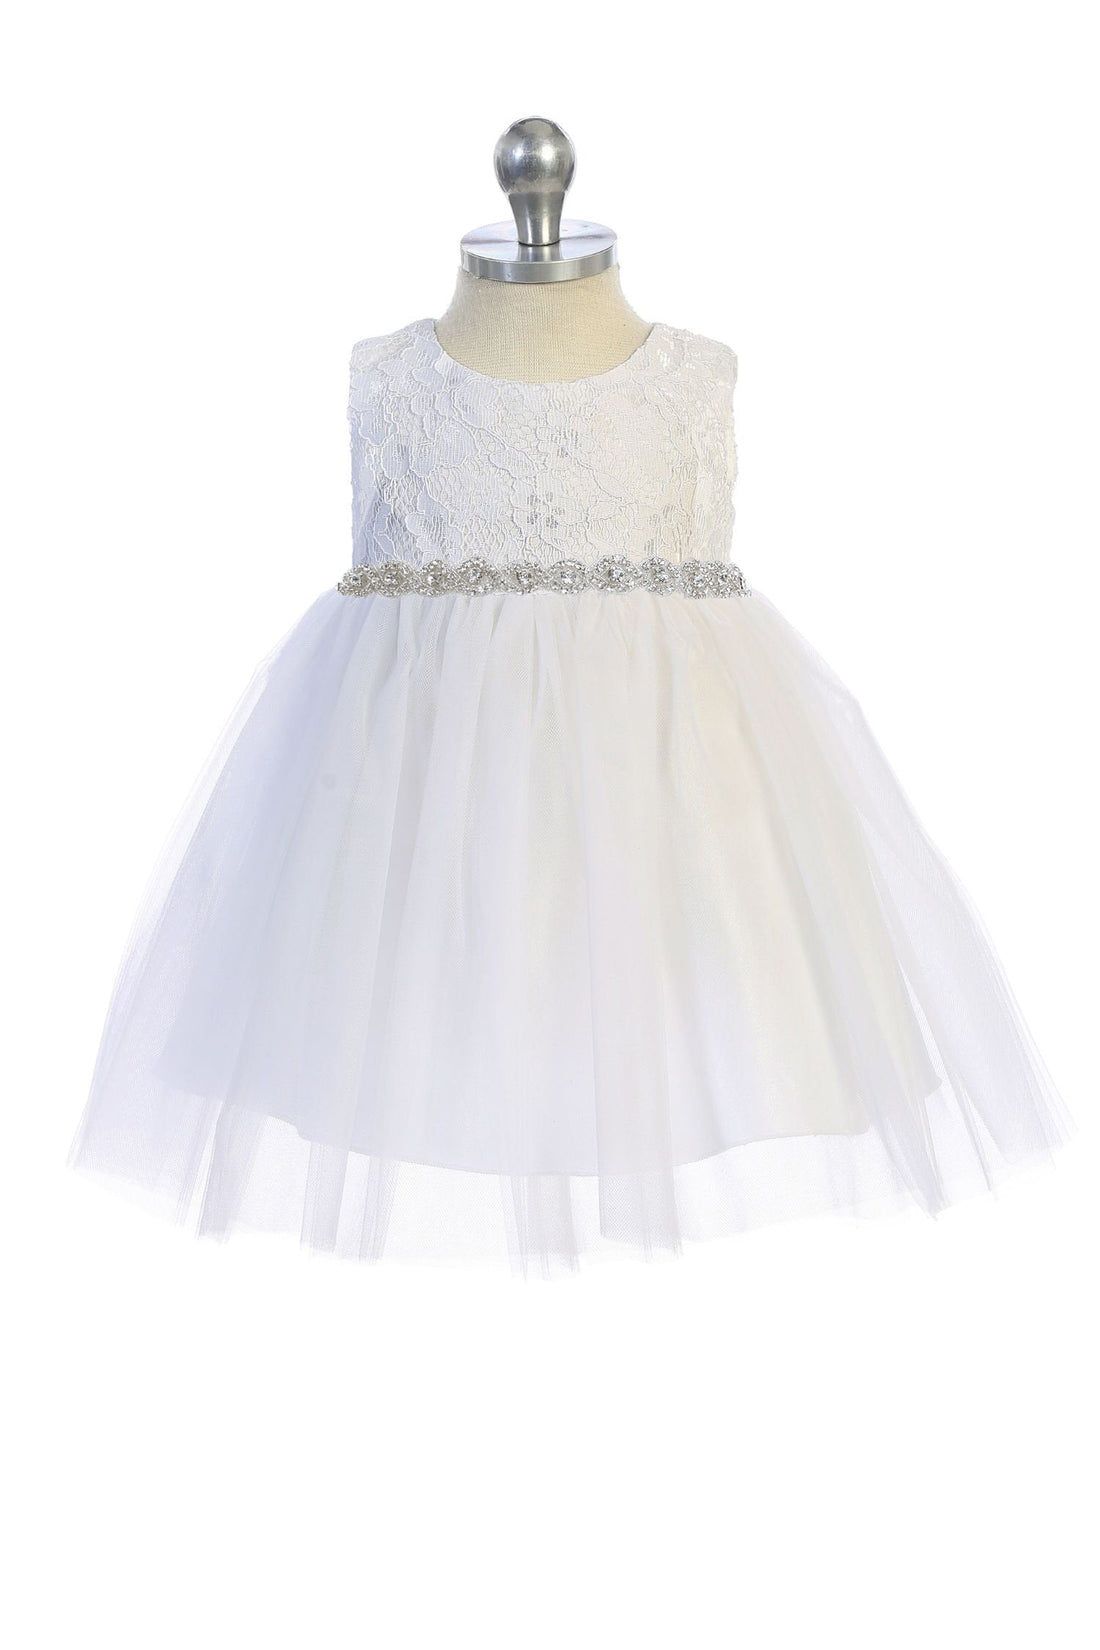 Baby Girl Lace & Rhinestone Trim Party Dress - AS456B-A Kids Dream